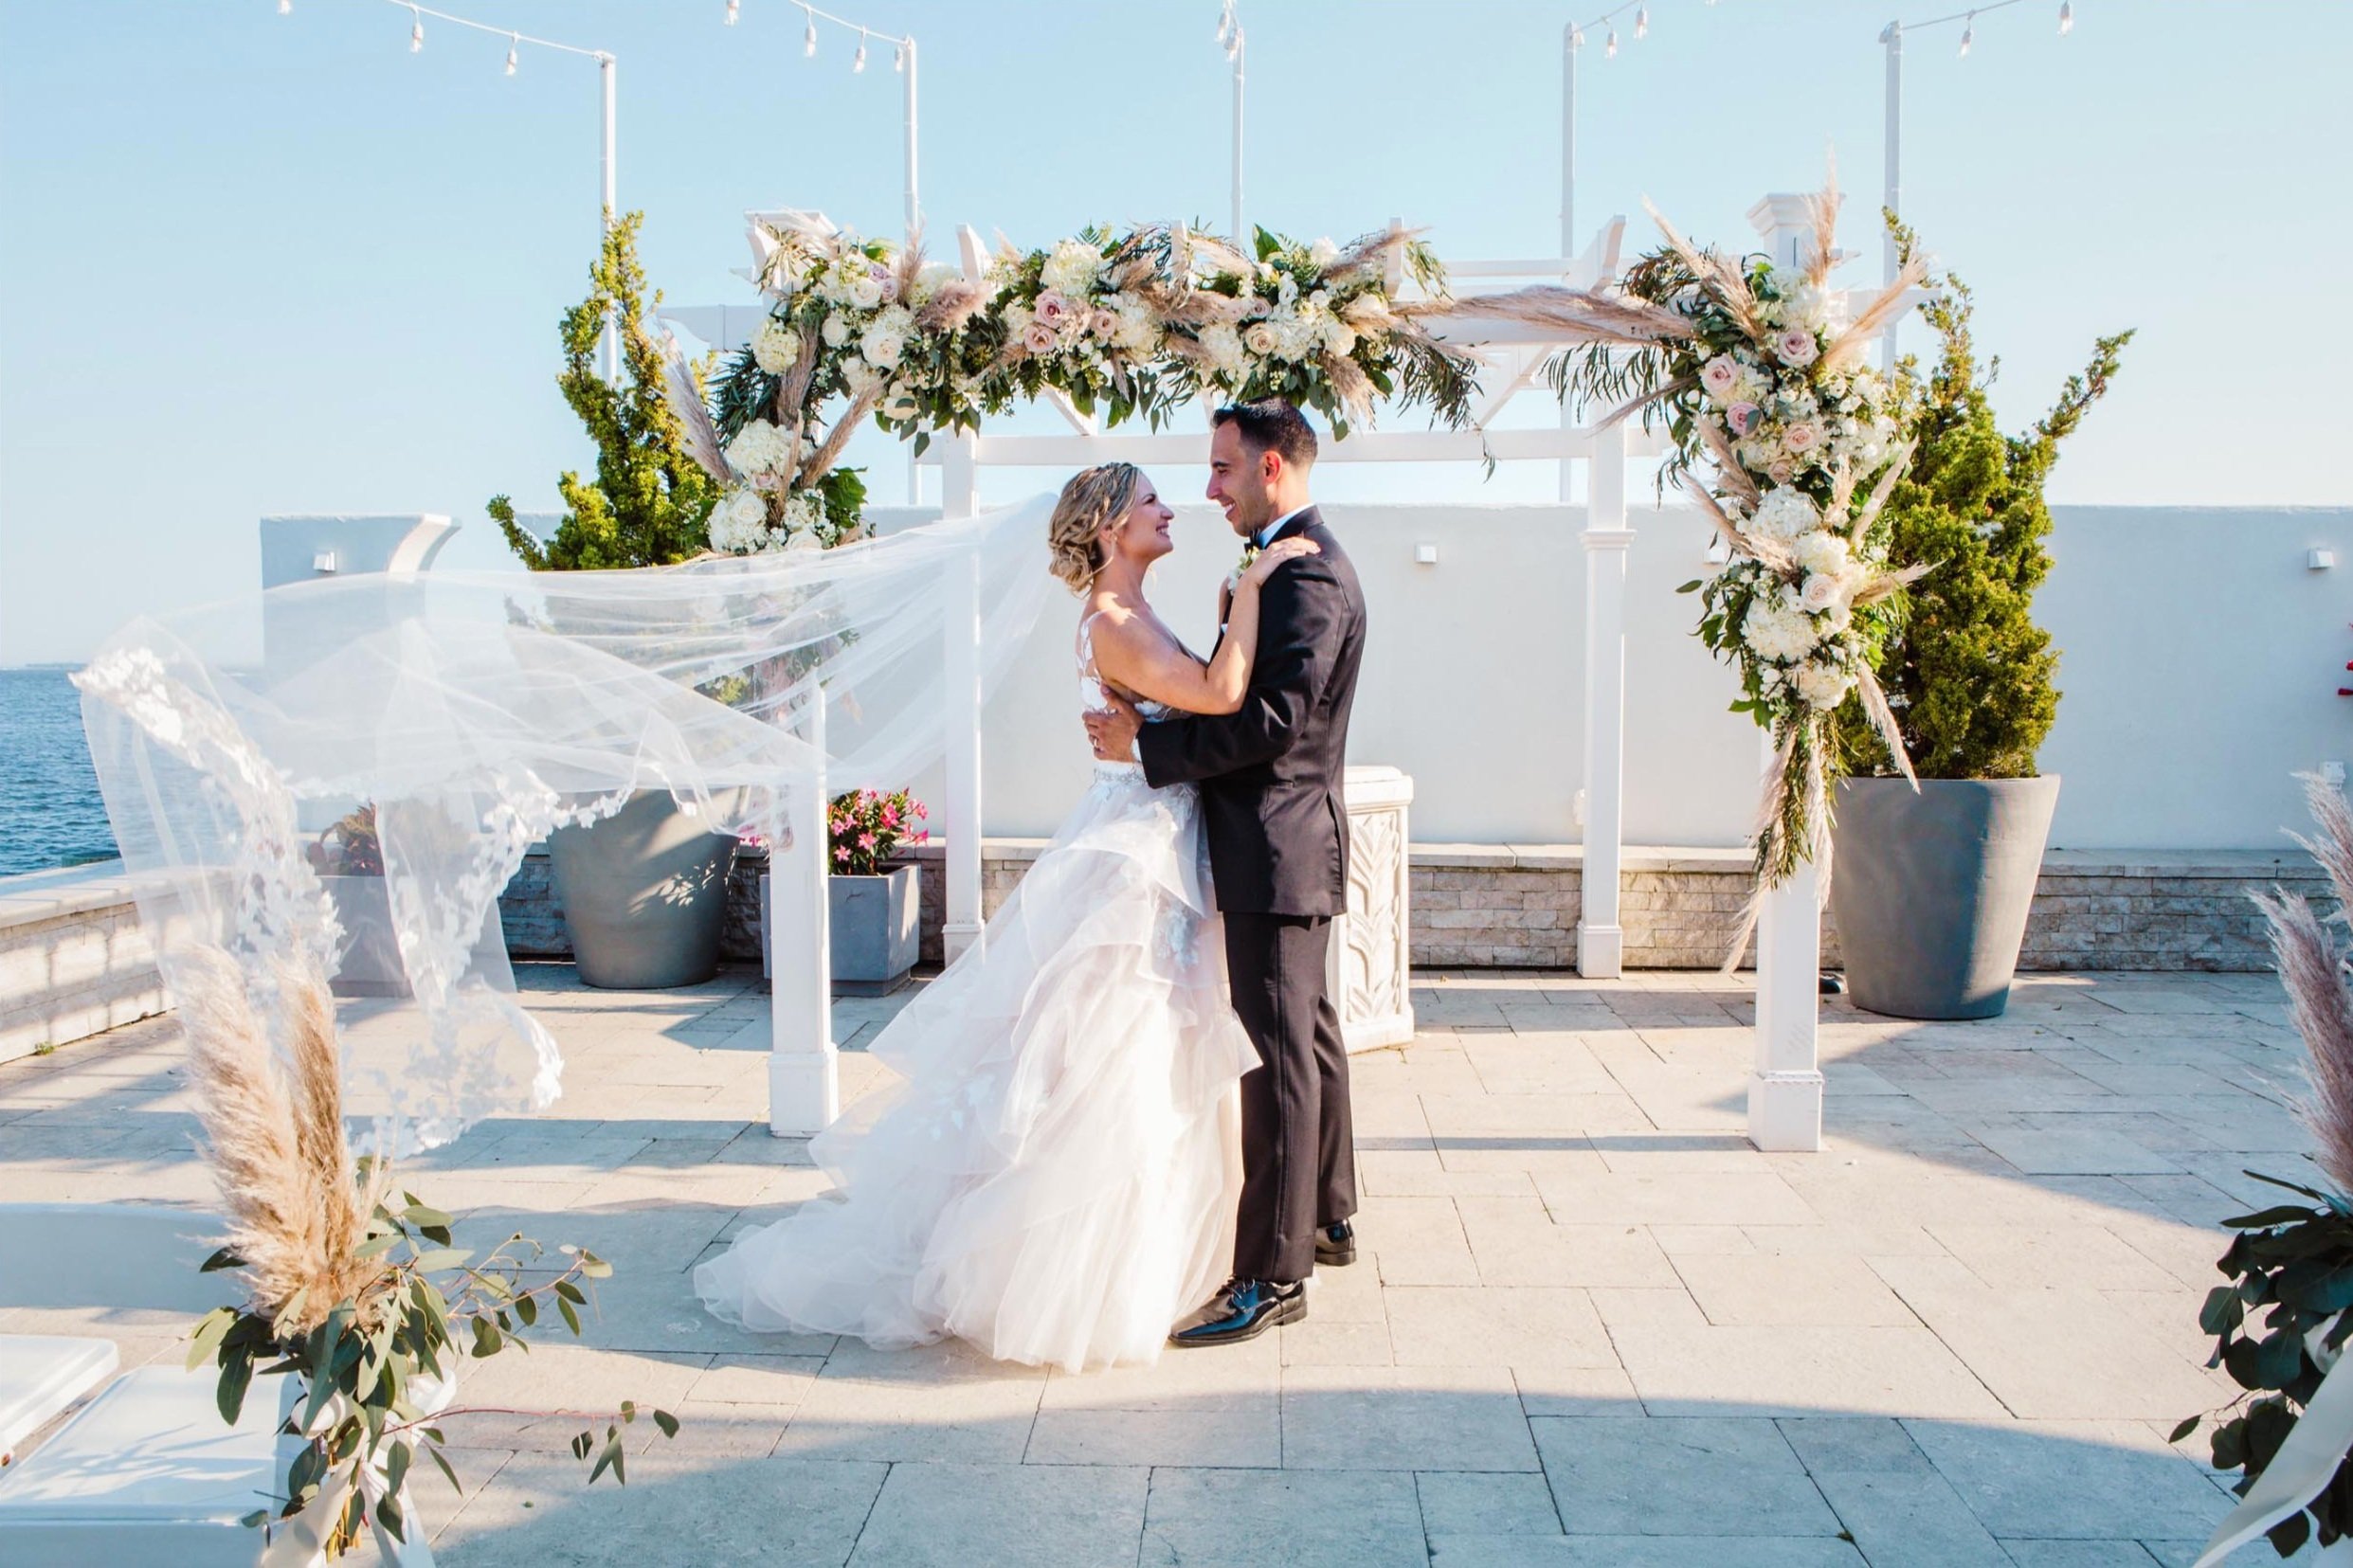 hengstenbergs-florist-weddings-love-story-kyra-michael-%C2%A9SilverfoxStudios-006.jpg